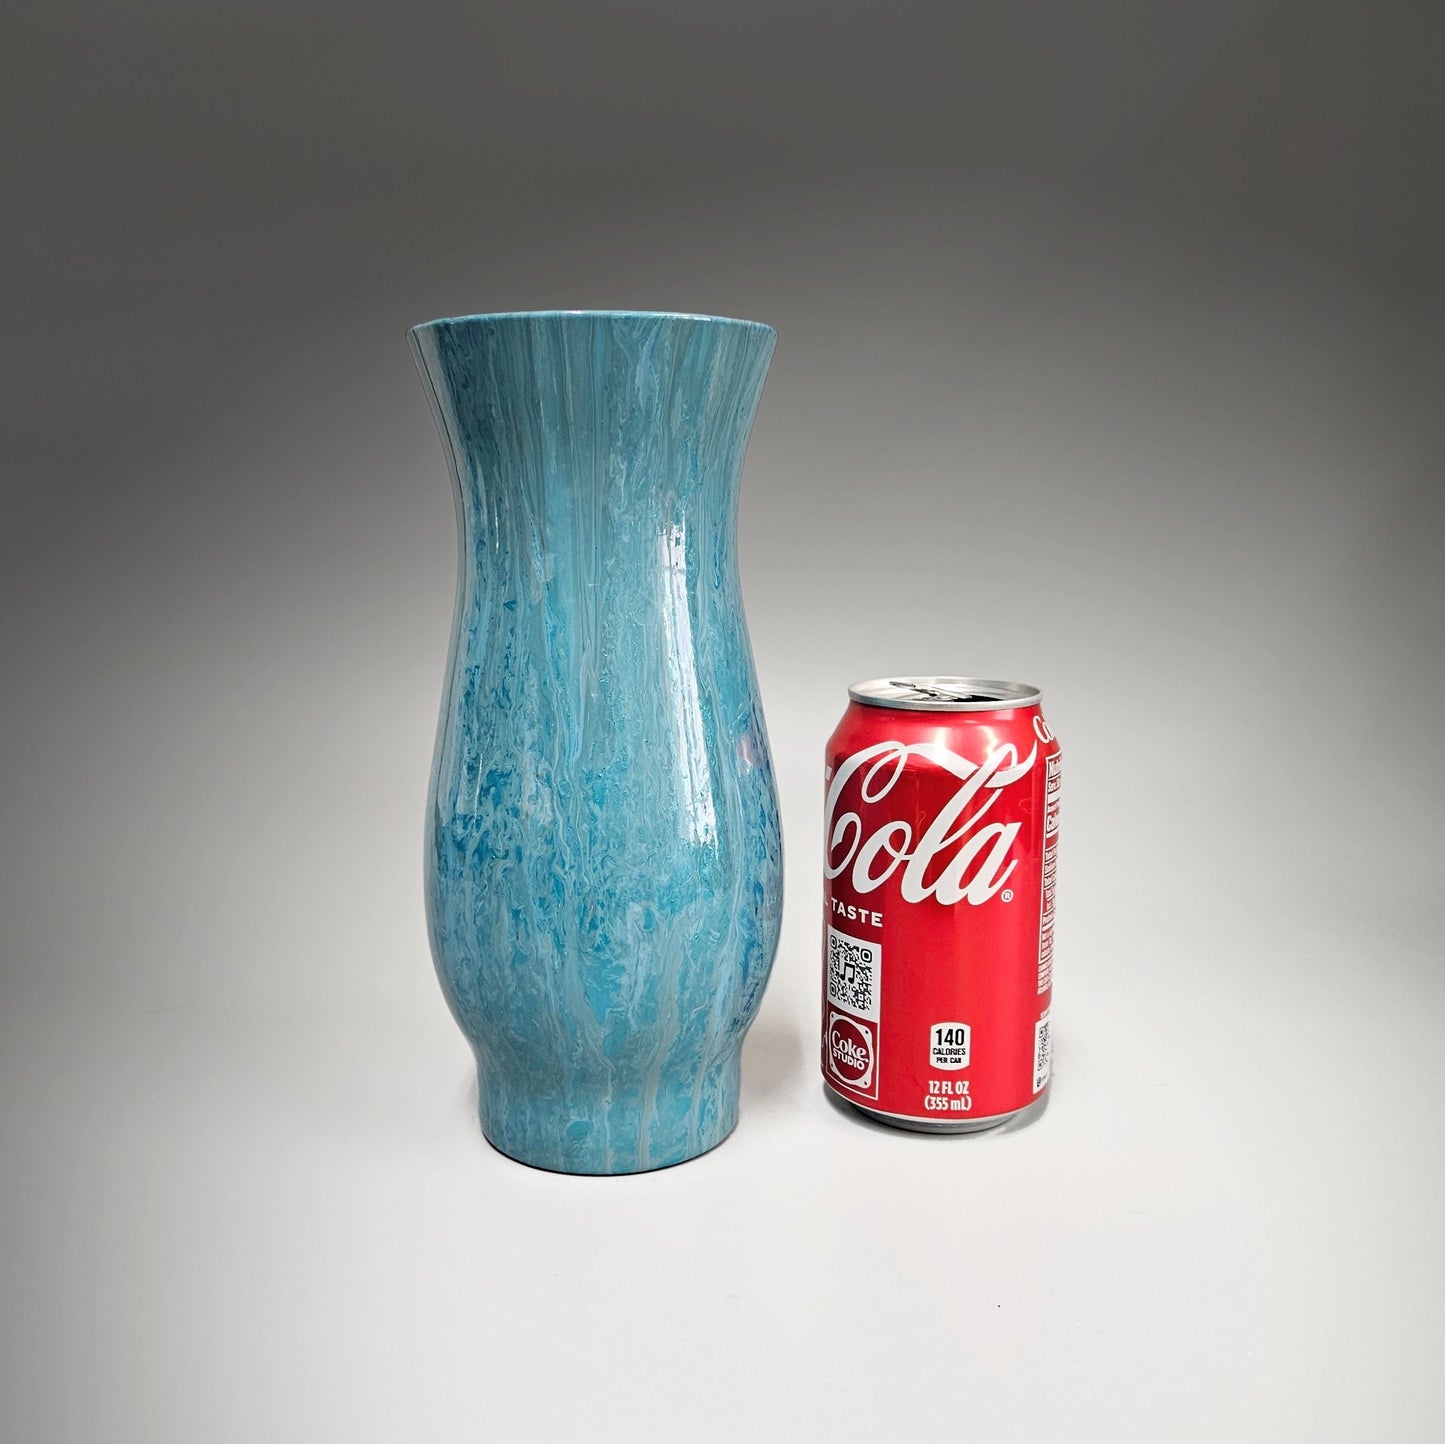 Fluid Art Glass Vase in Aqua Teal and Gray